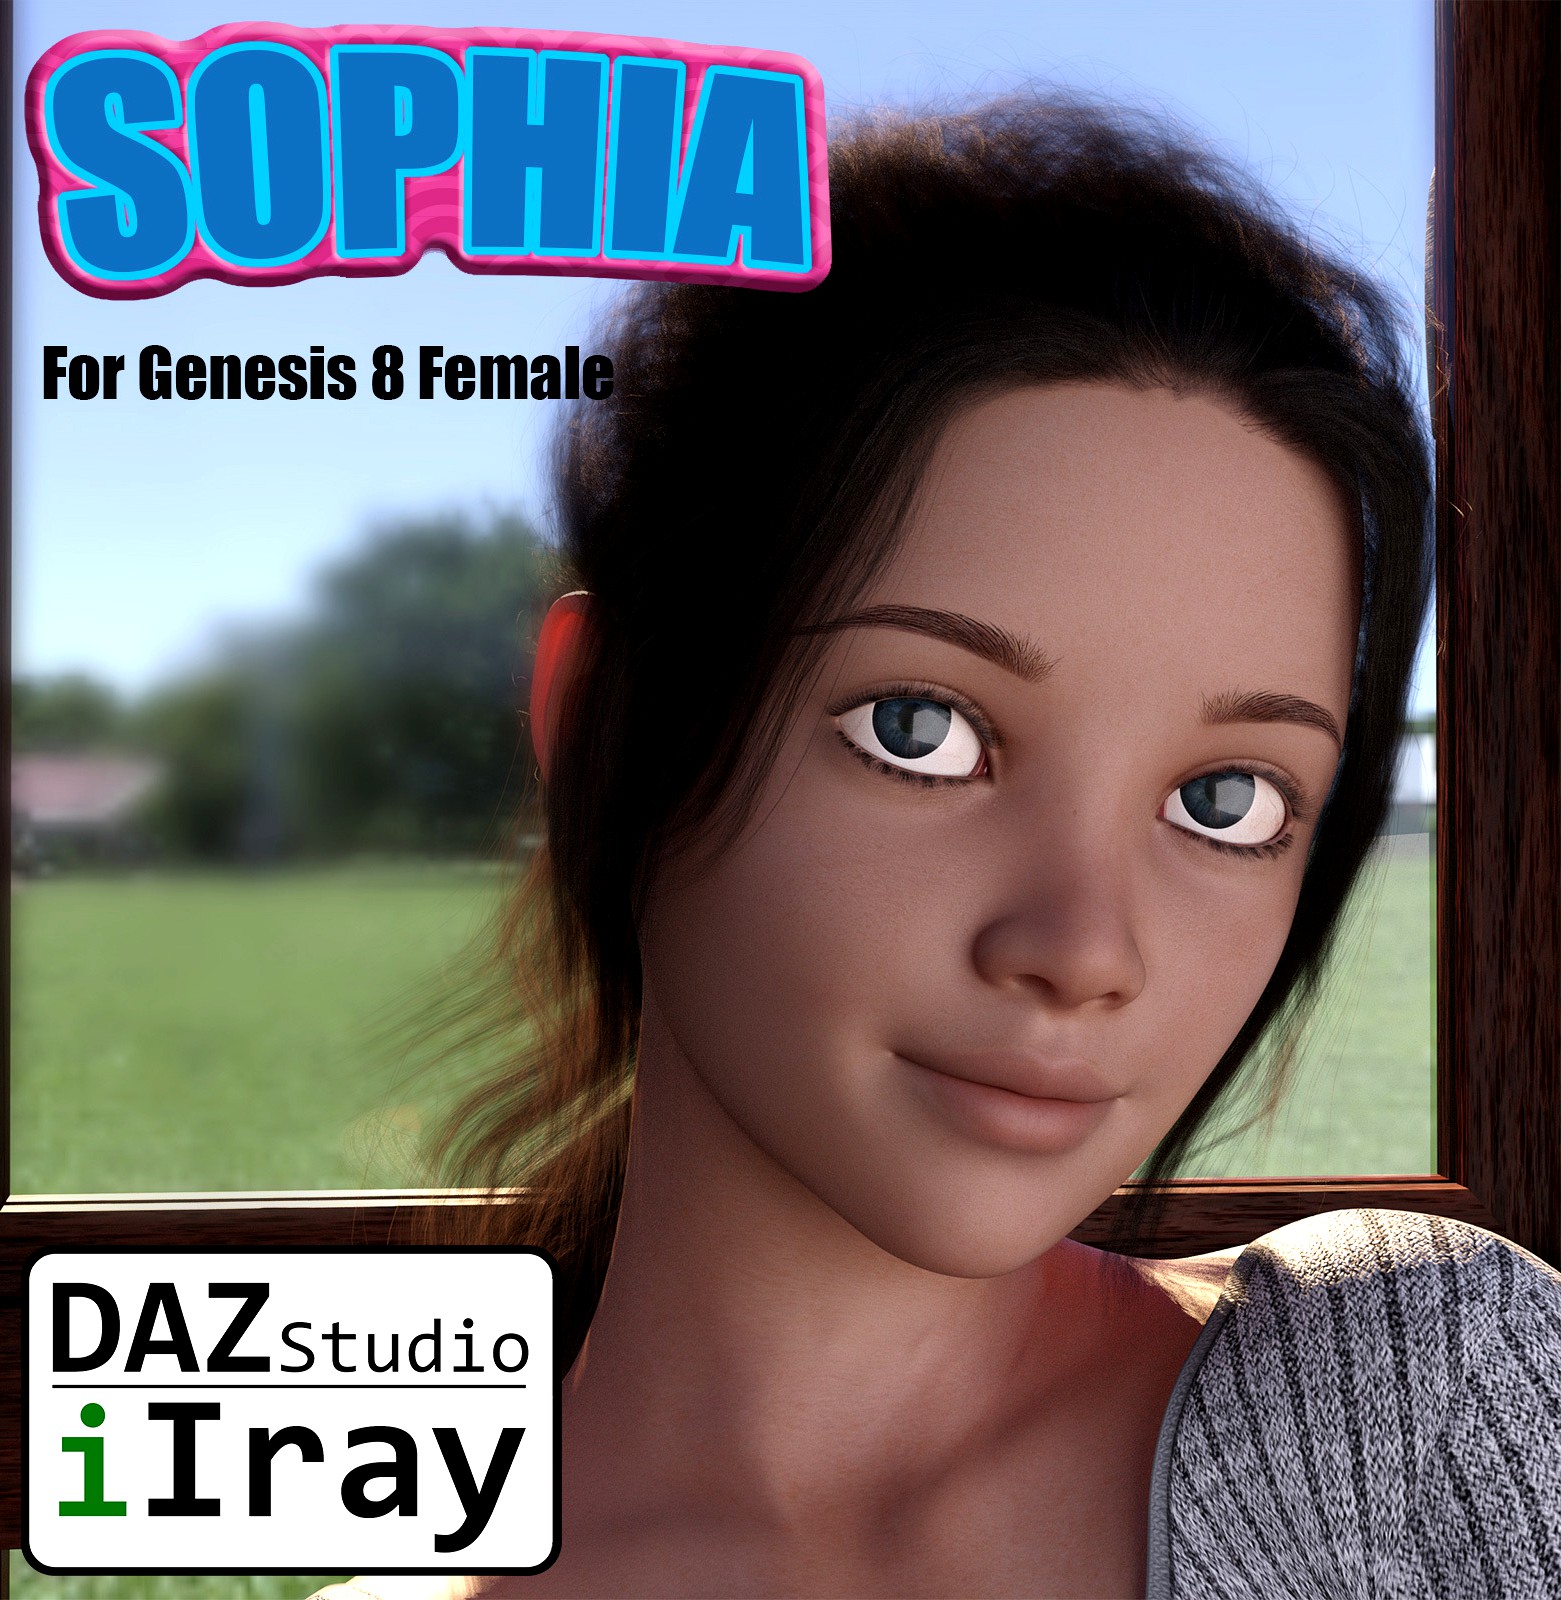 Sophia for Genesis 8 Female - IRAY G8F